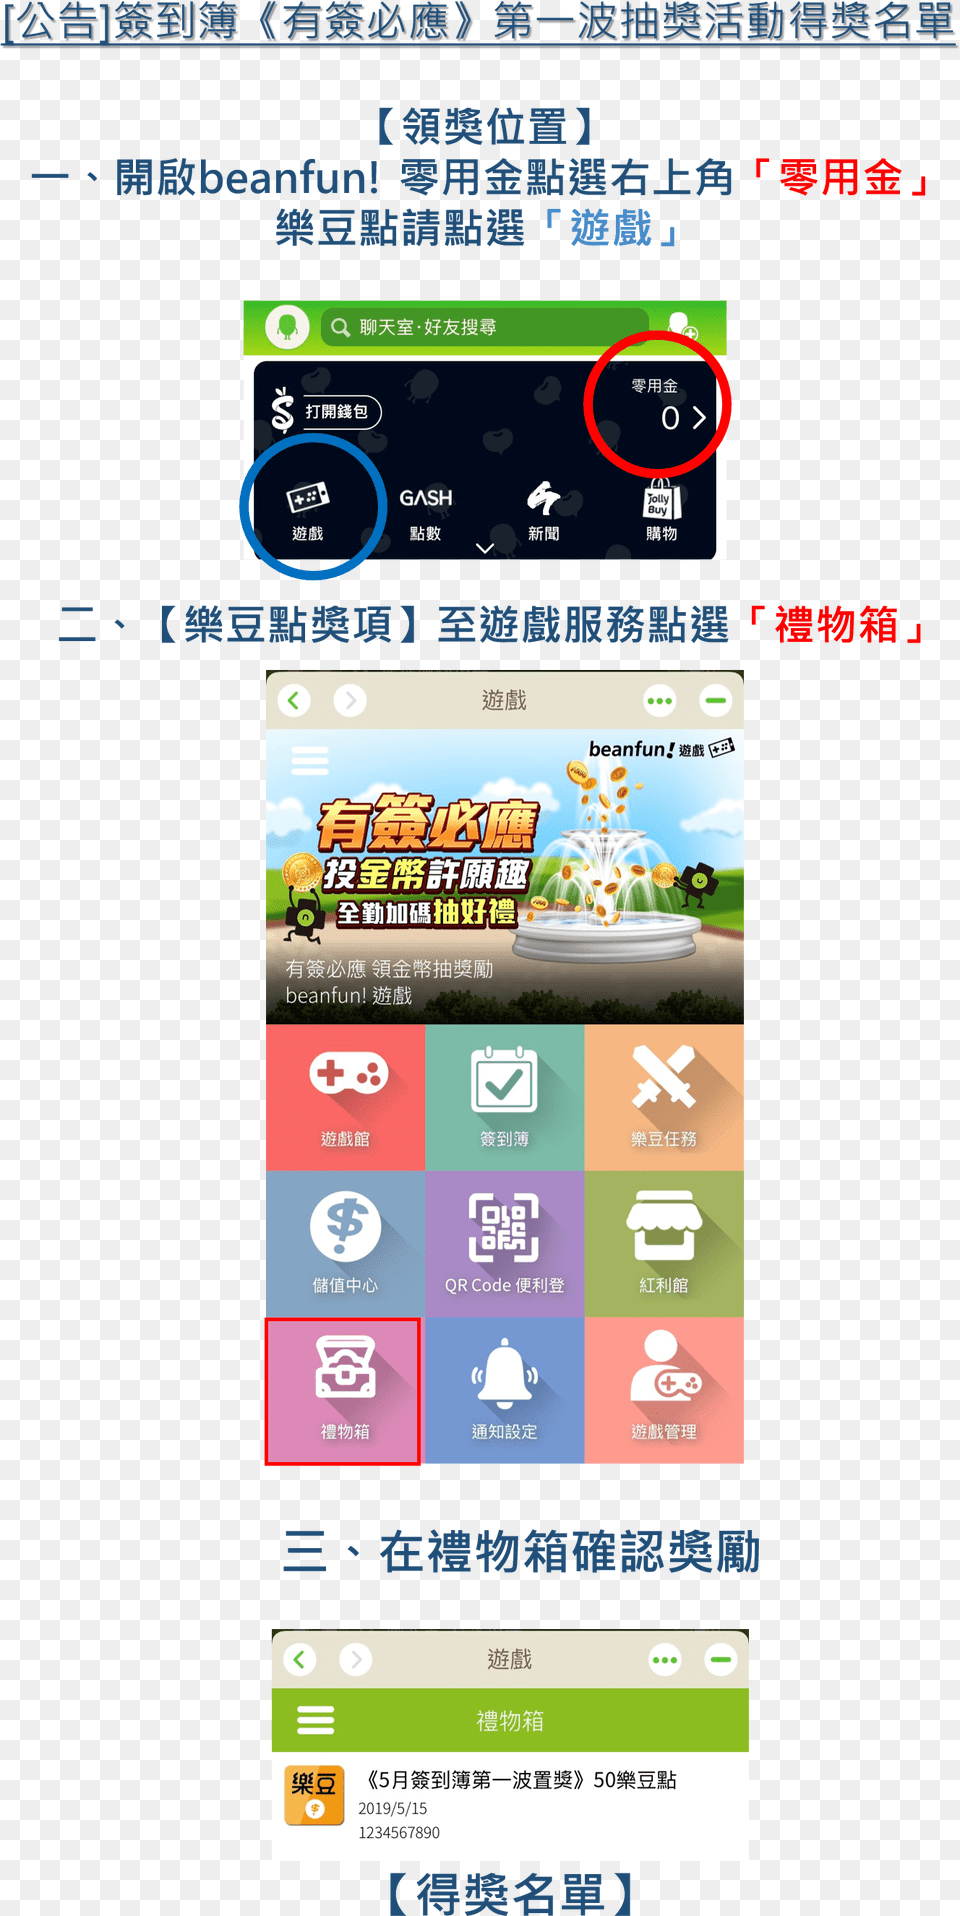 Beanfun News Screenshot, Scoreboard Png Image